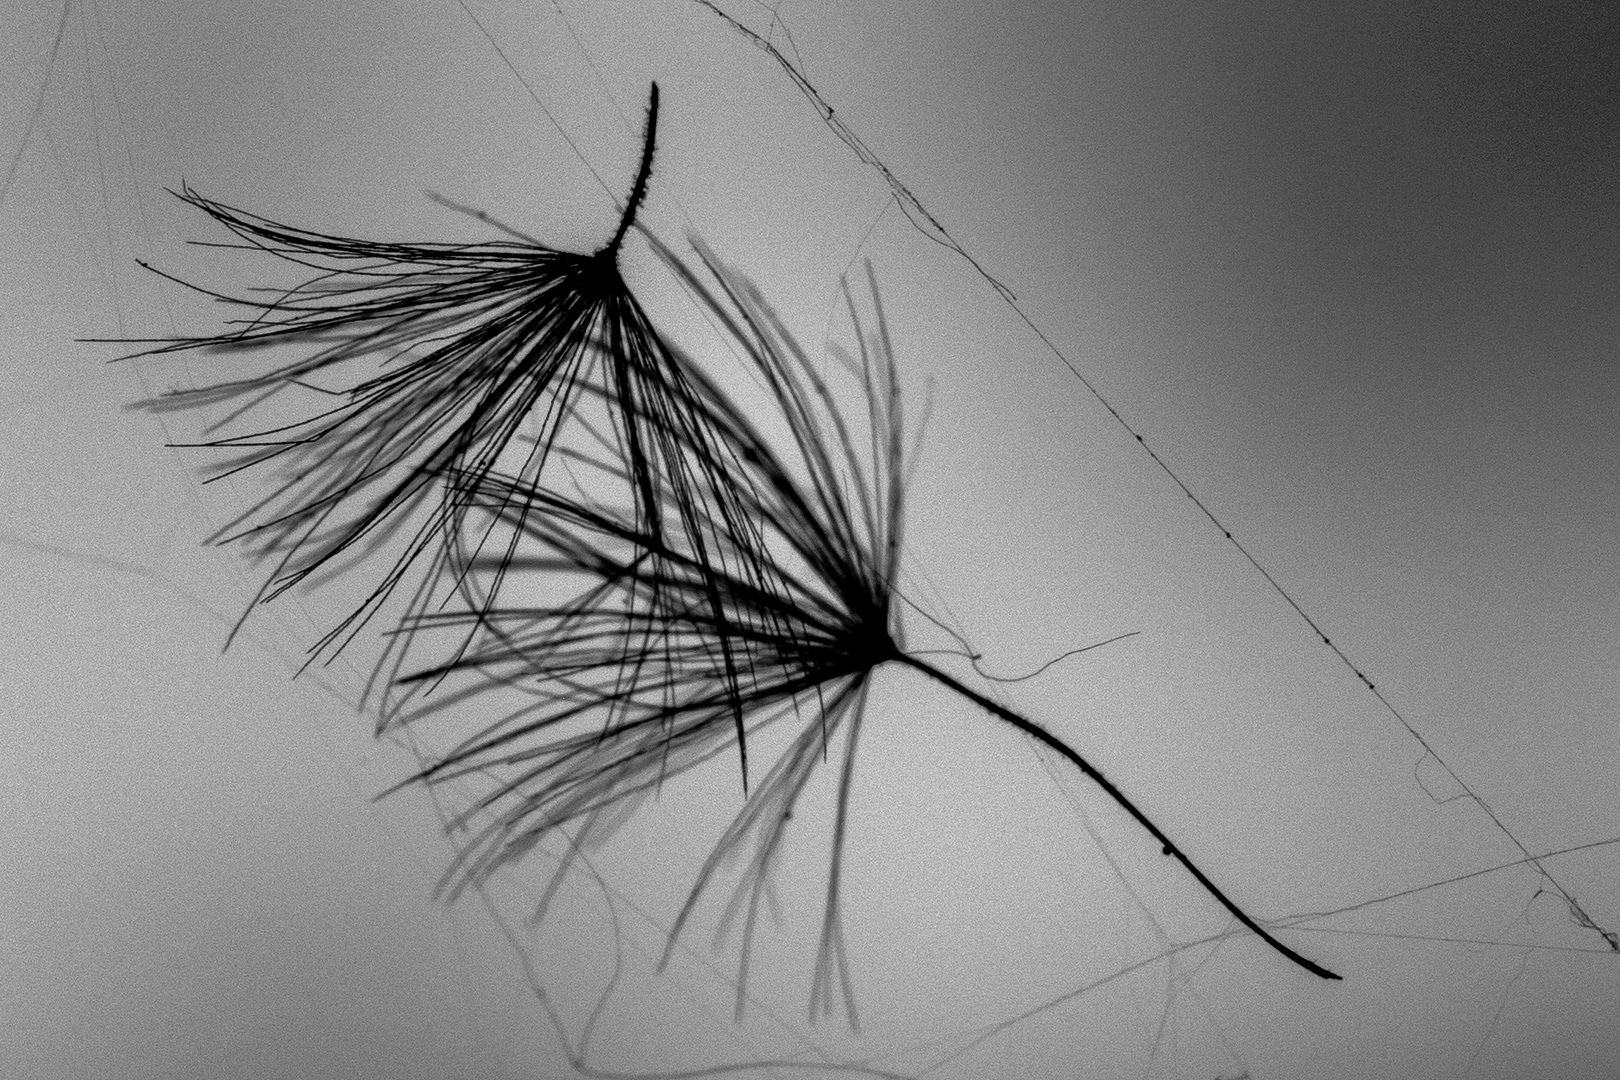 seeds in spider web